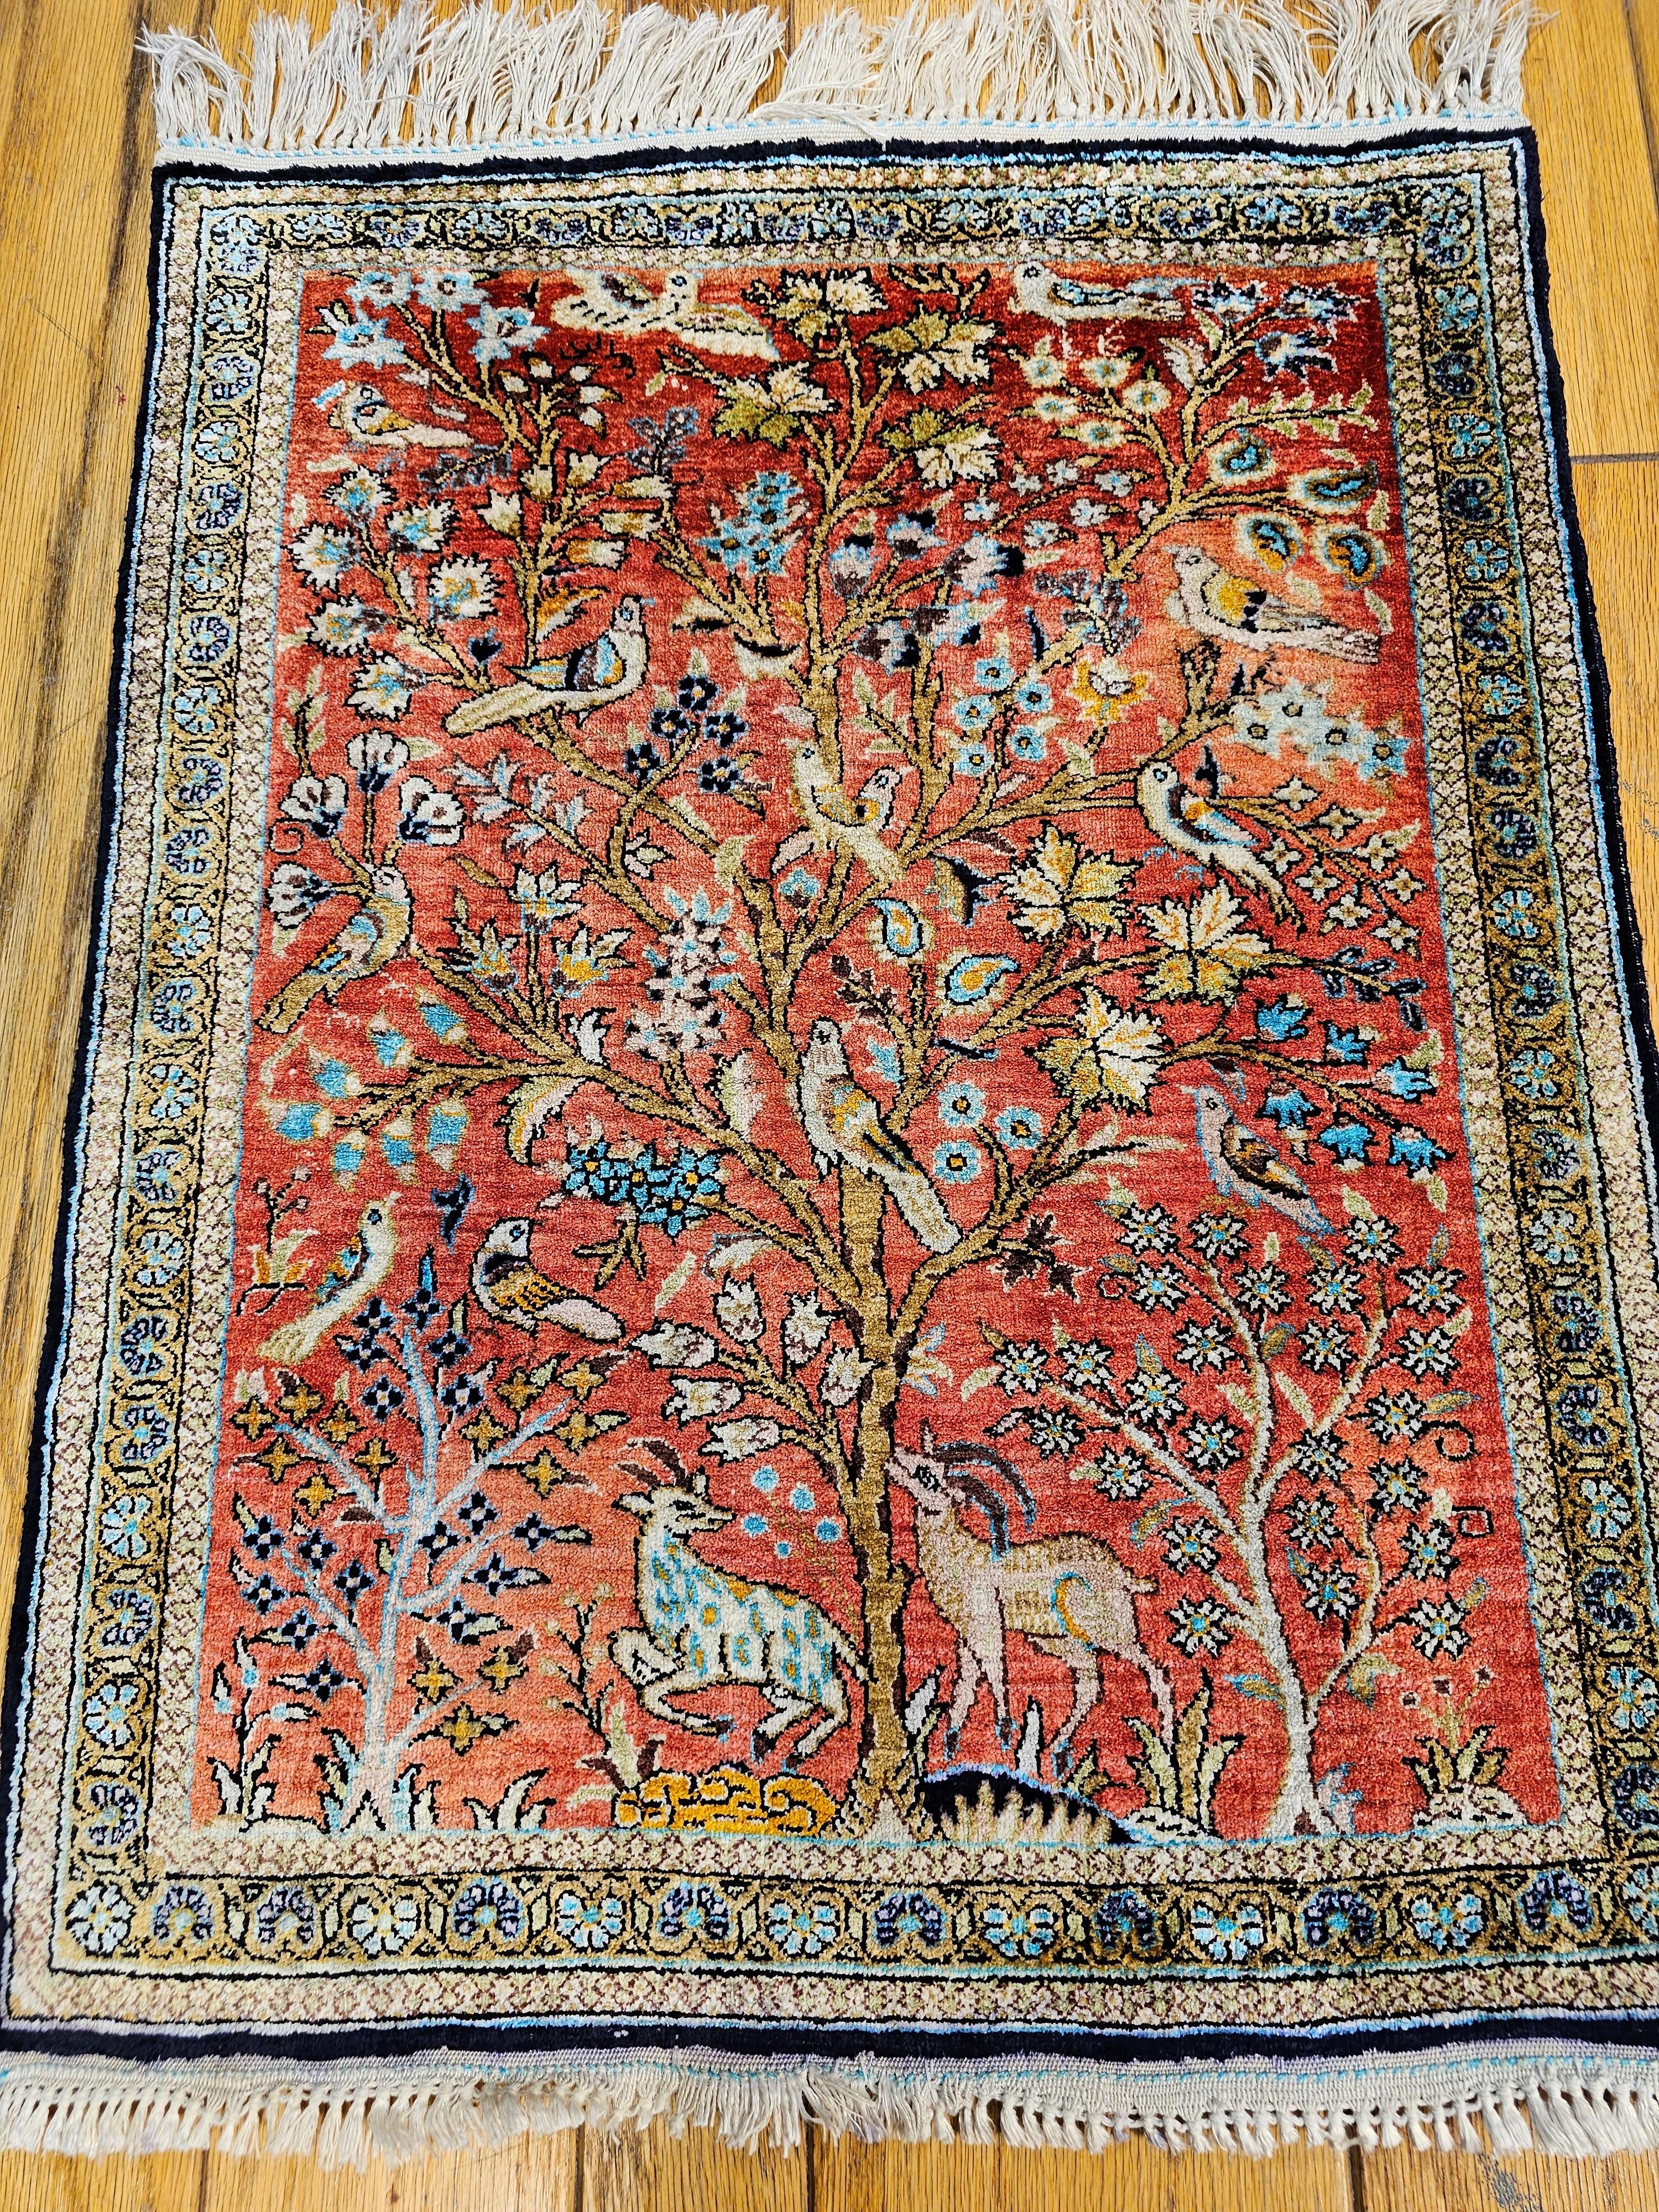  A beautiful Turkish silk prayer rug with a 